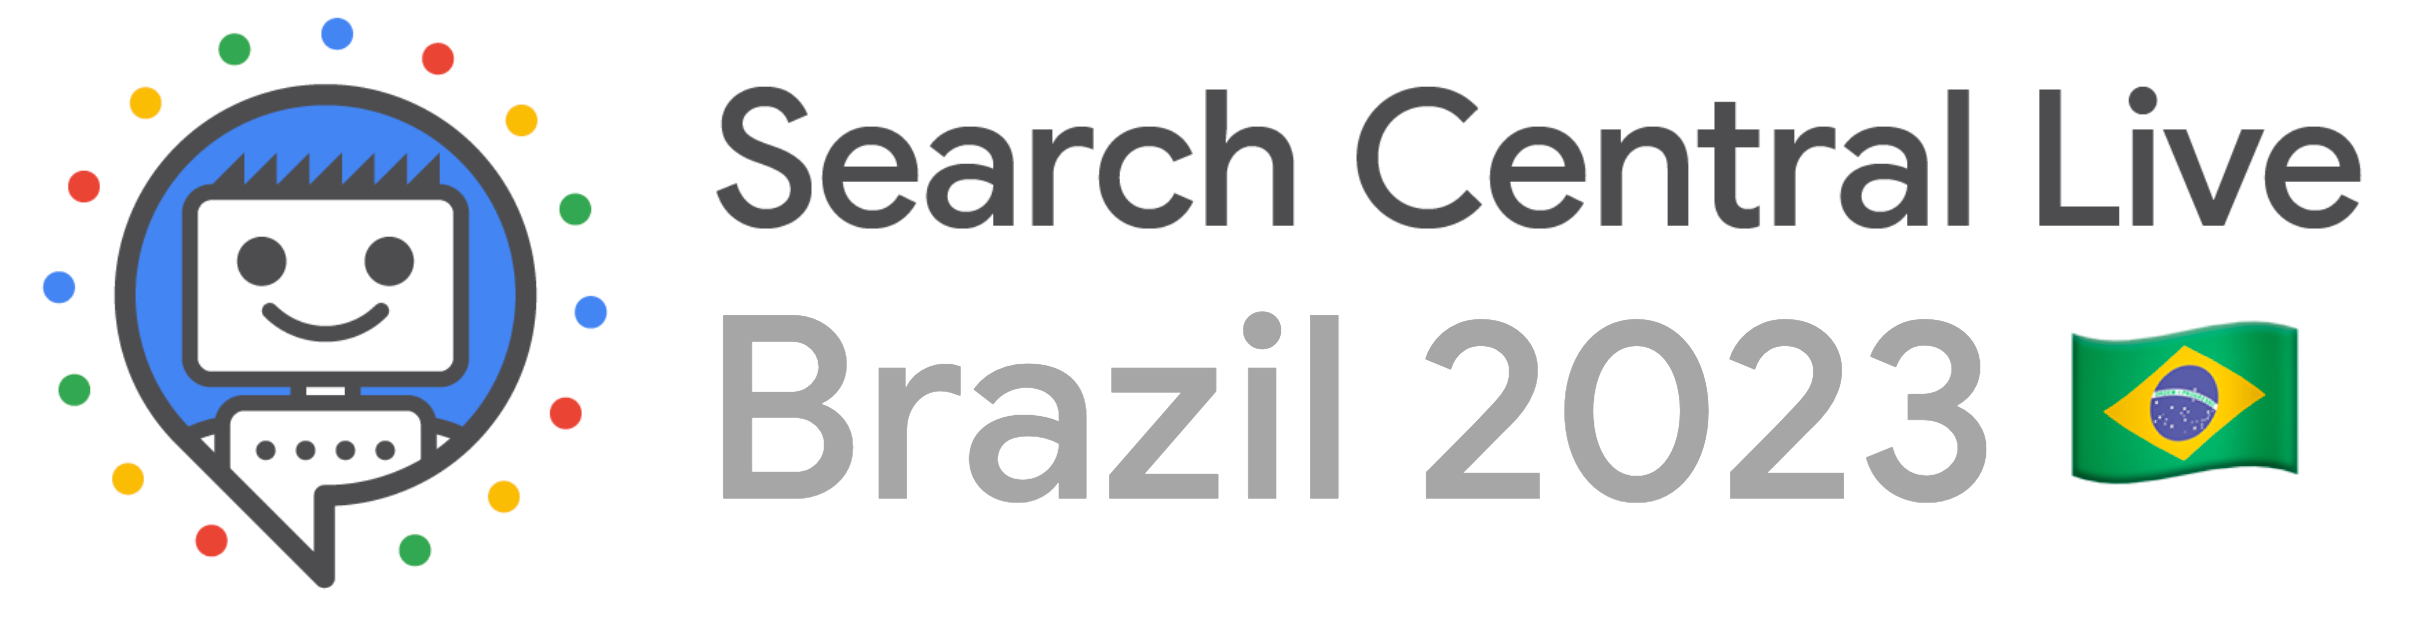 Search Central Live Brazil logo